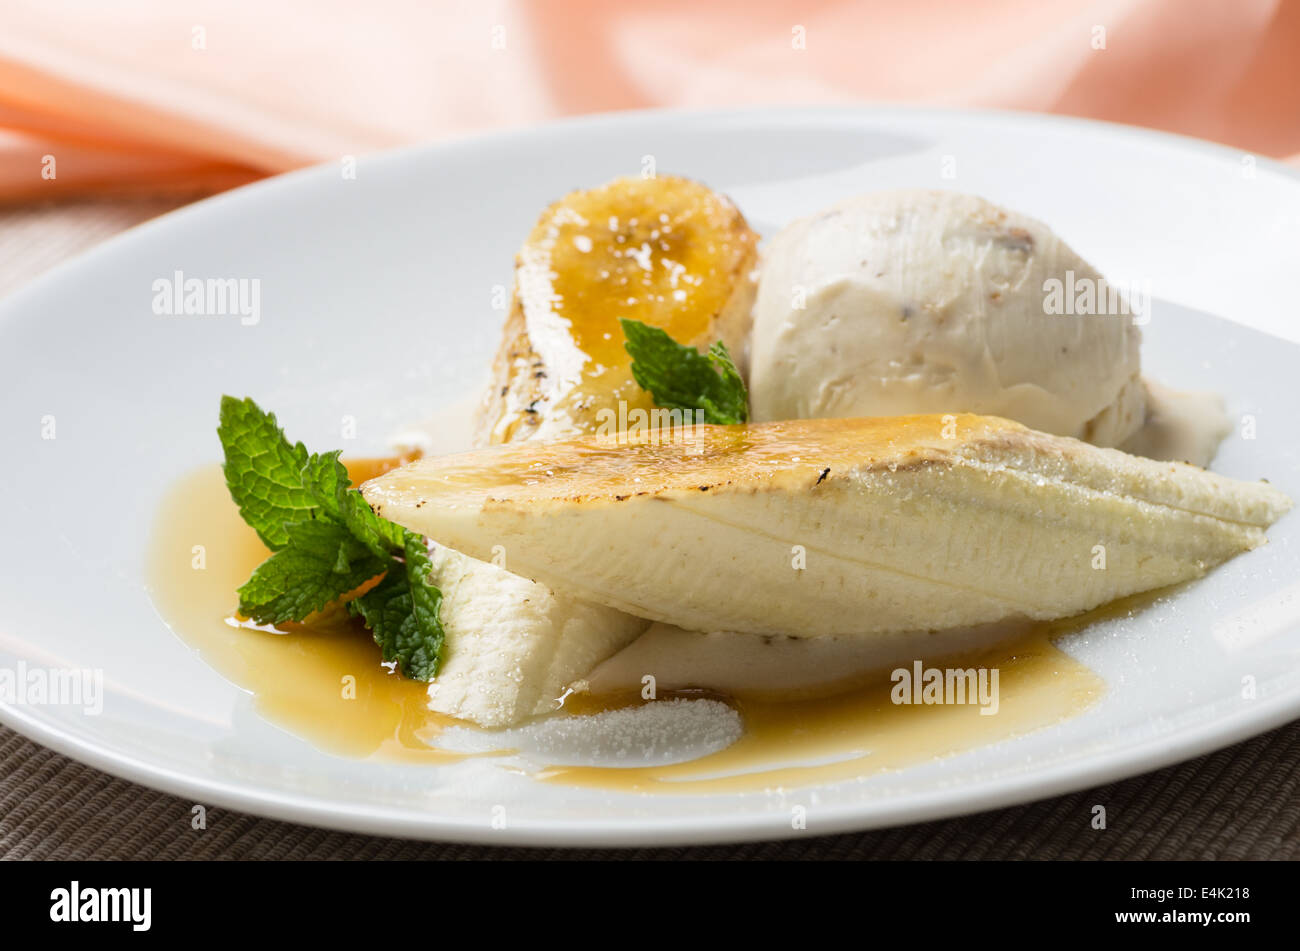 Dessert made with caramelized bananas vanila ice cream and mint Stock Photo